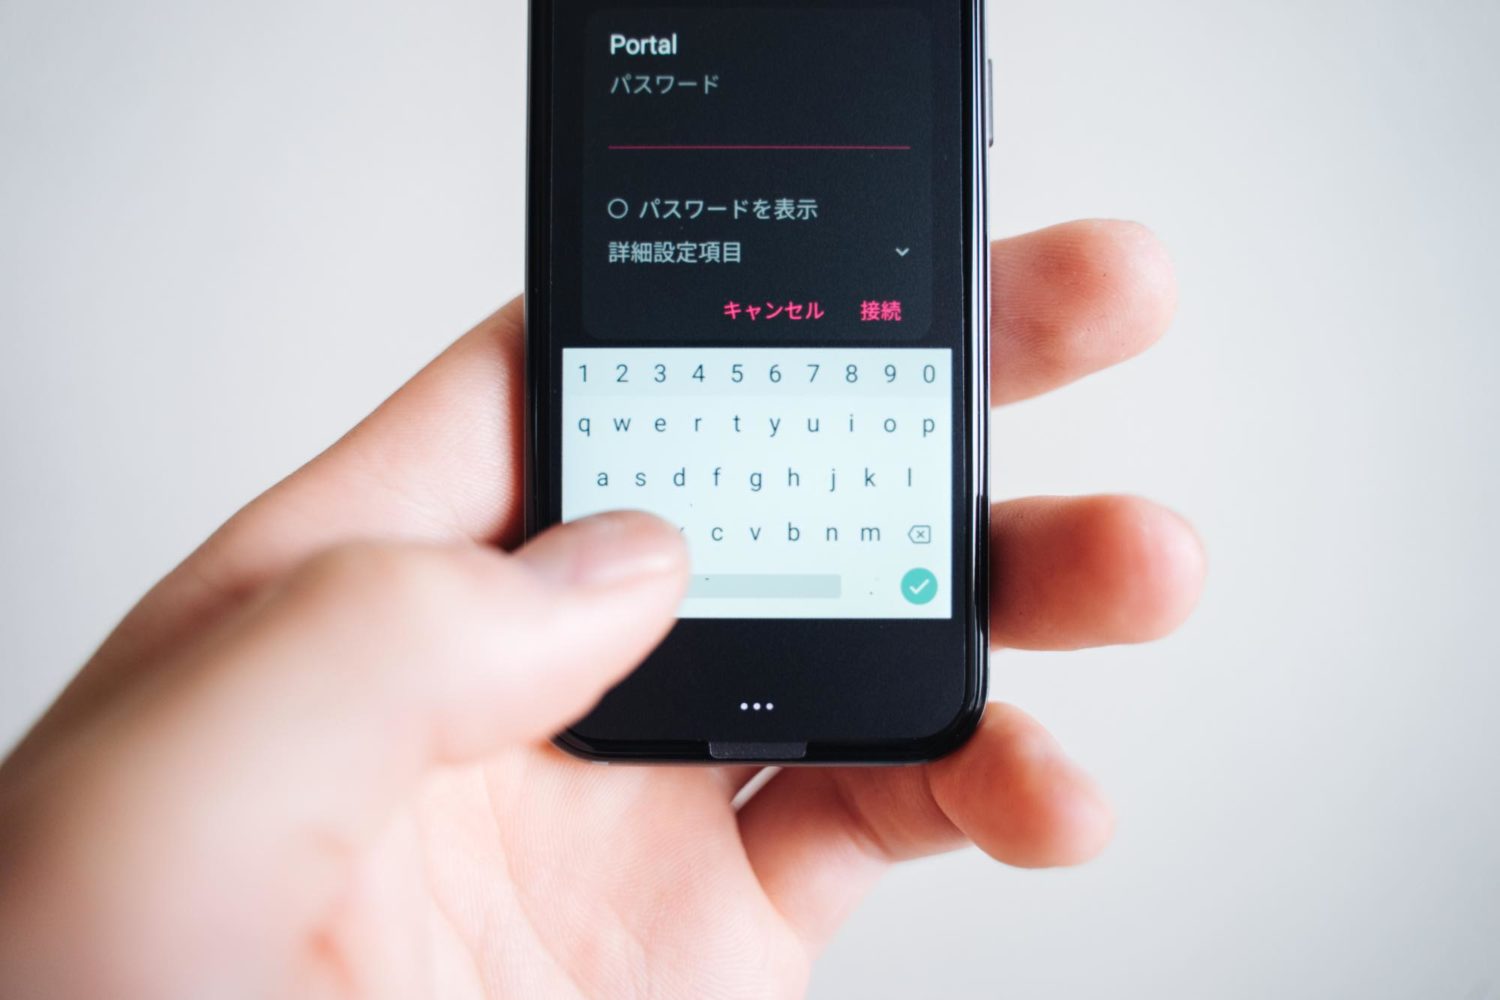 Palm　phone　パームフォンスマートフォン/携帯電話